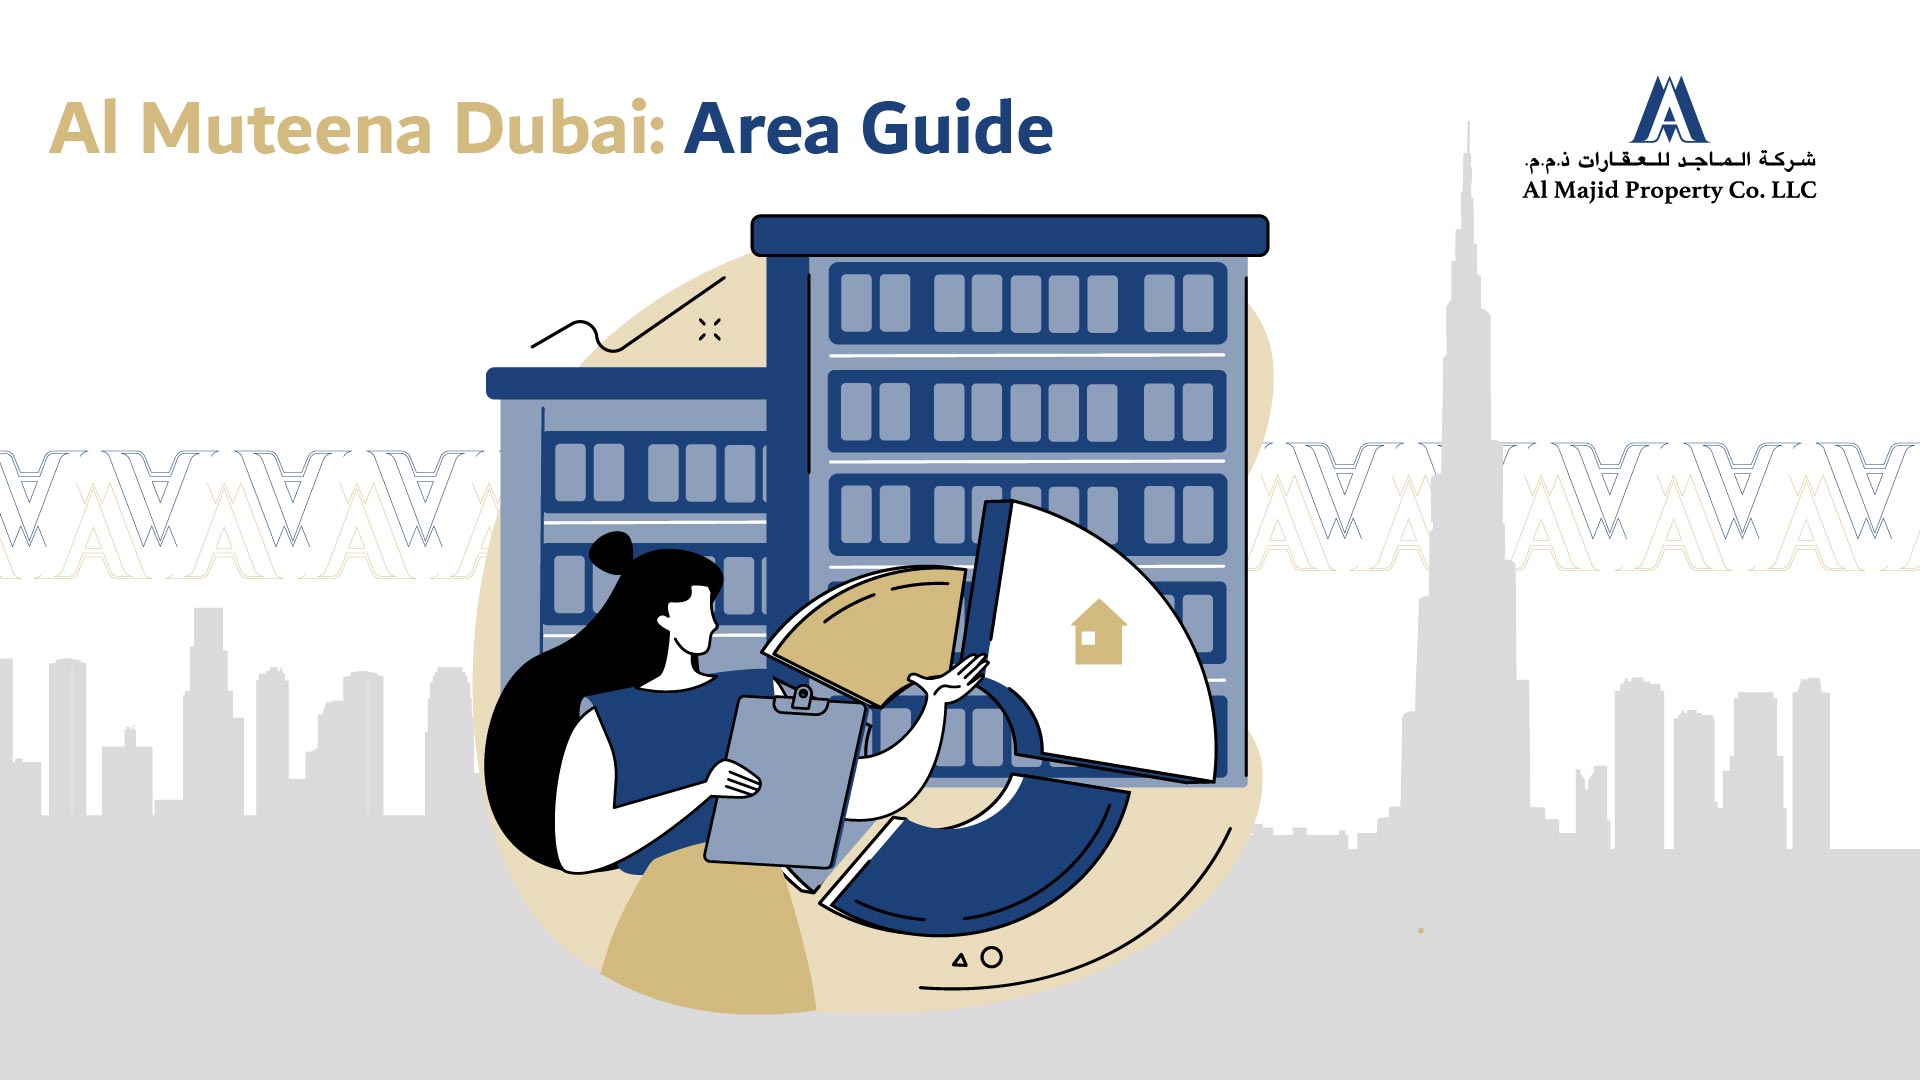 Al Muteena Dubai: Area Guide